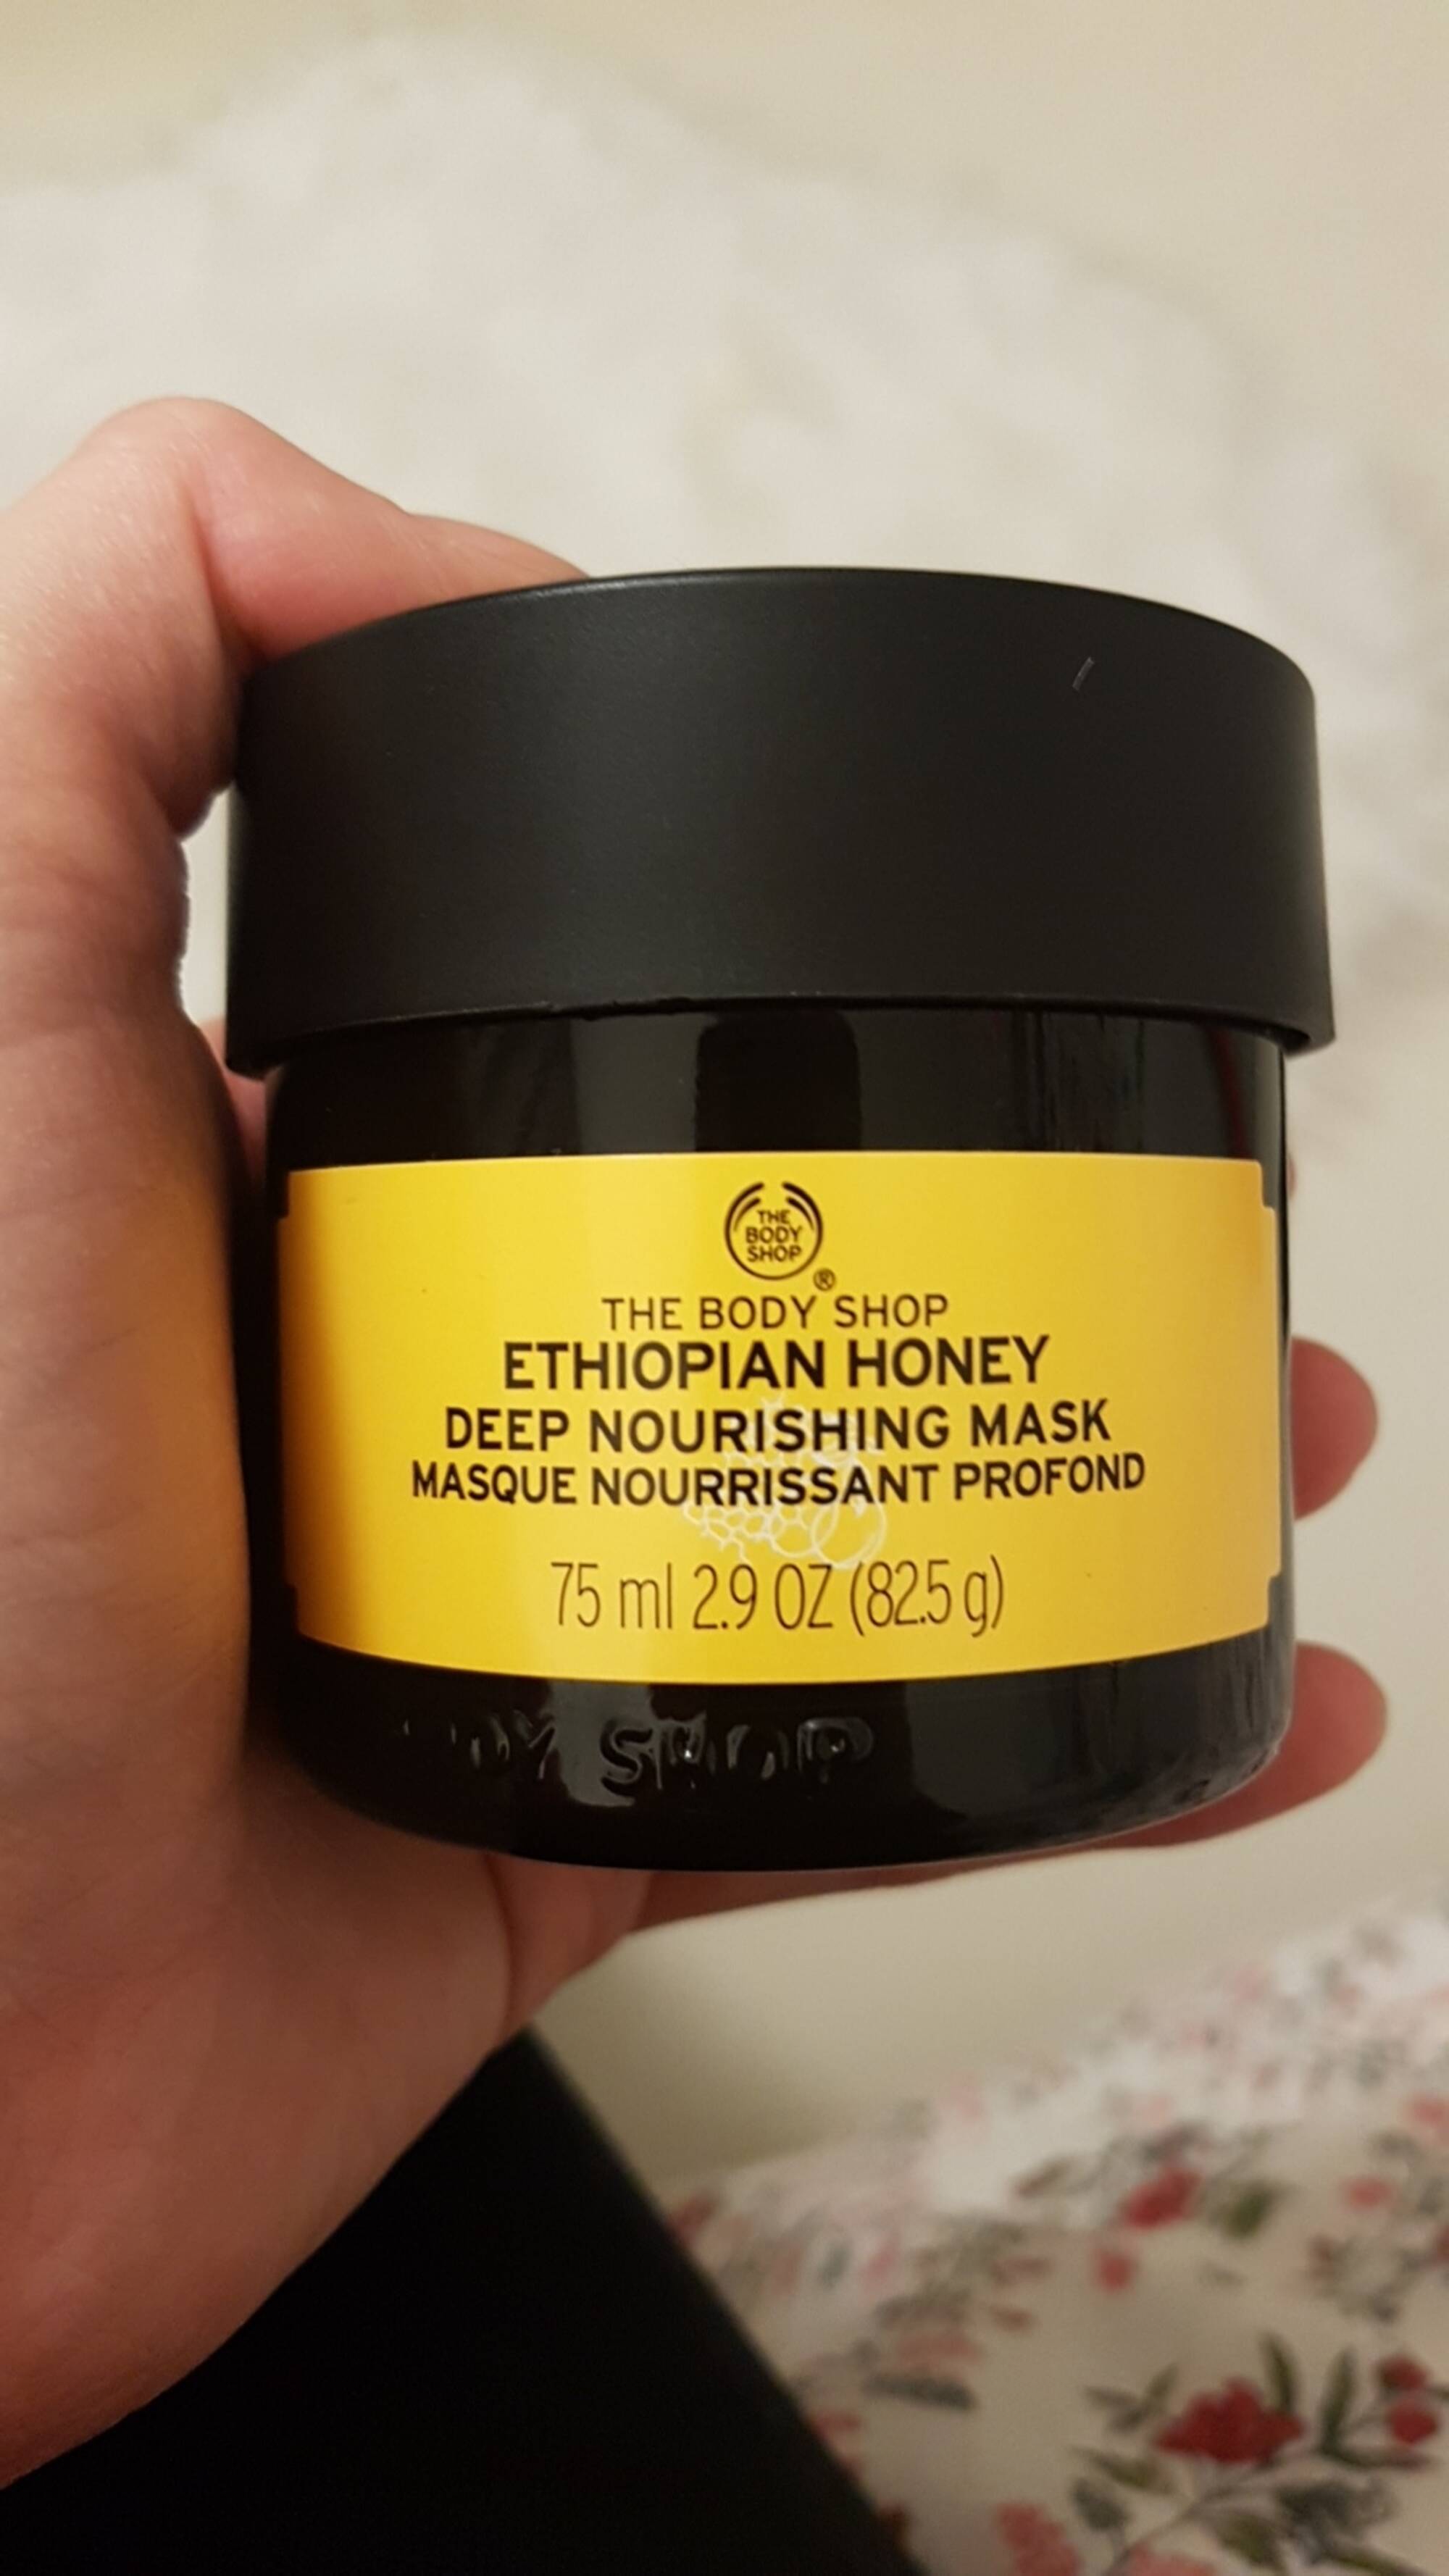 THE BODY SHOP - Ethiopian honey - Masque nourrissant profond